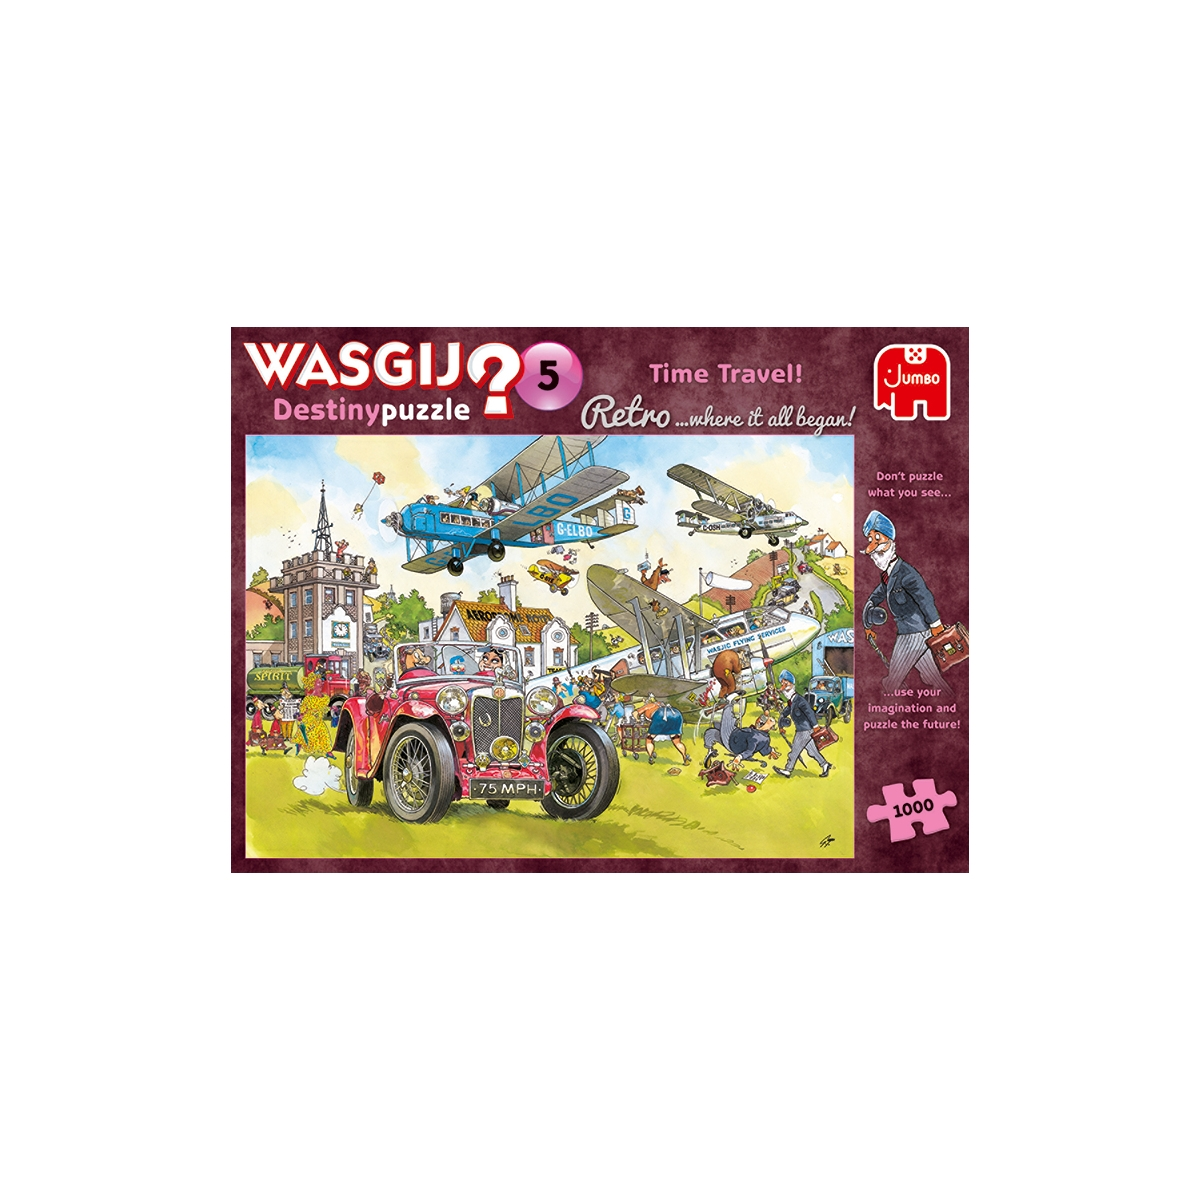 JUMBO Puzzlespiel, Teile Wasgij 25008 5-Zeitreise-1000 Puzzle Retro Destiny Mehrfarben